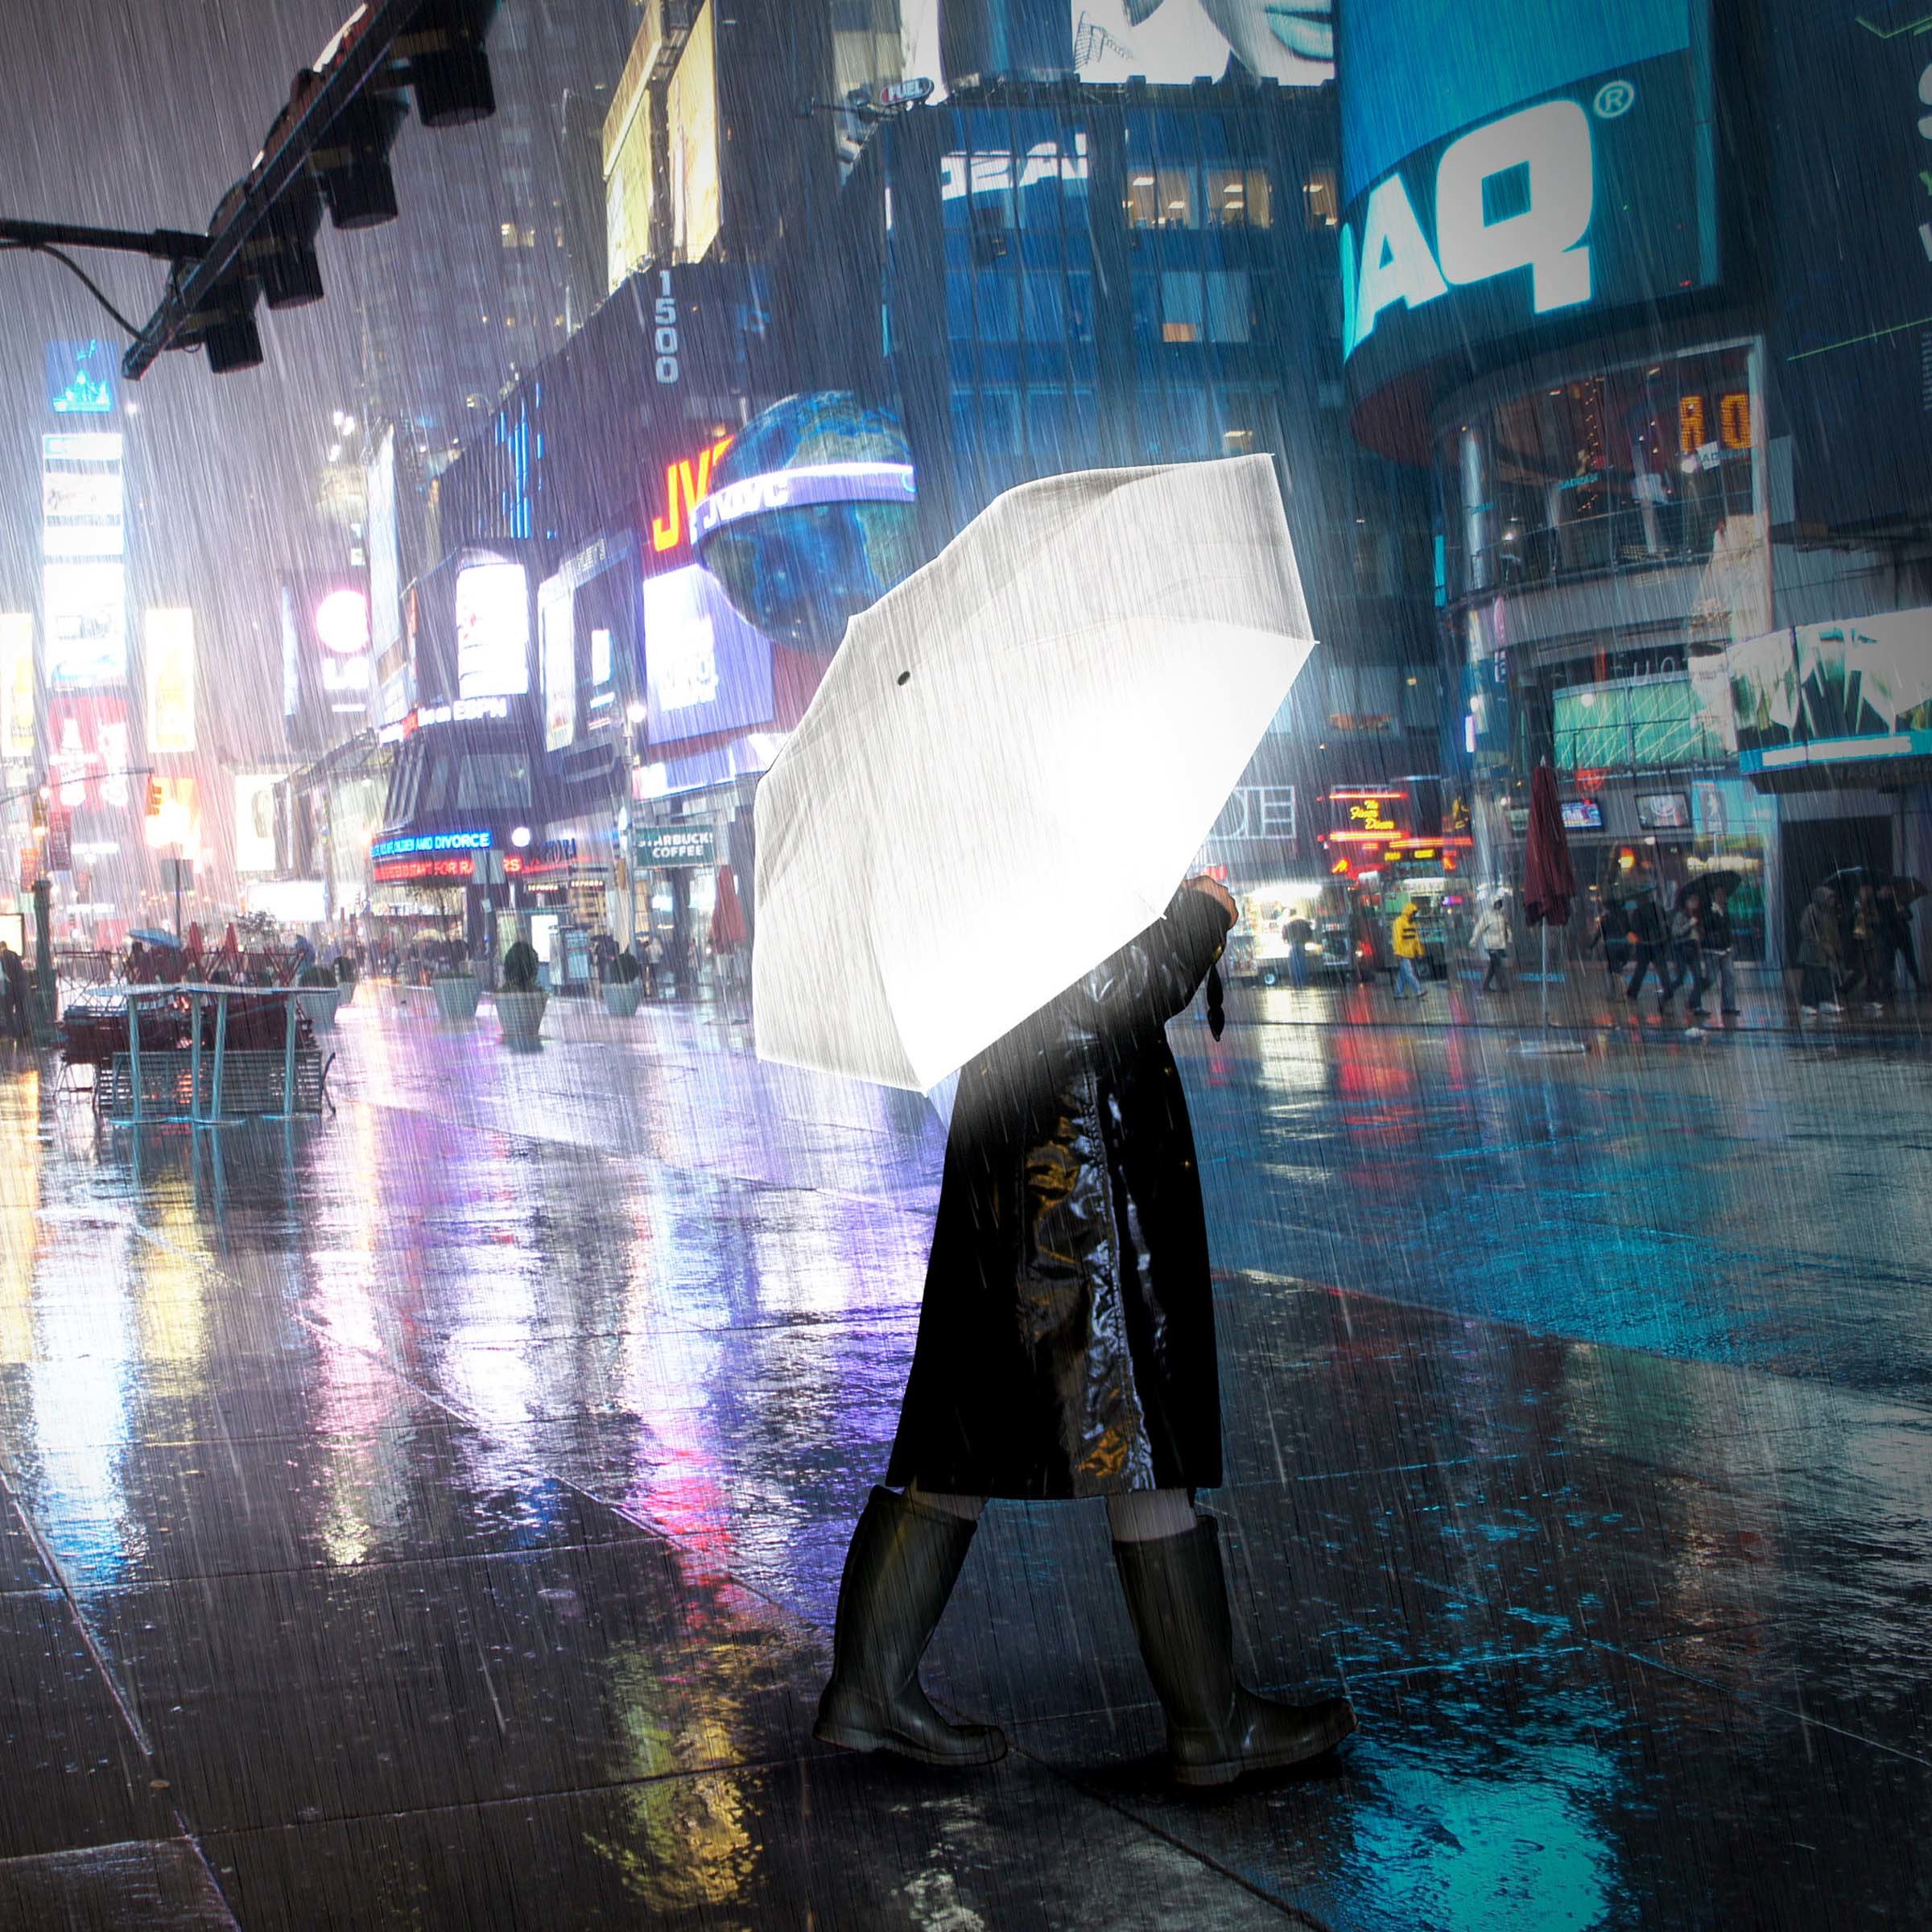 Bright at Night - Reflective Umbrella